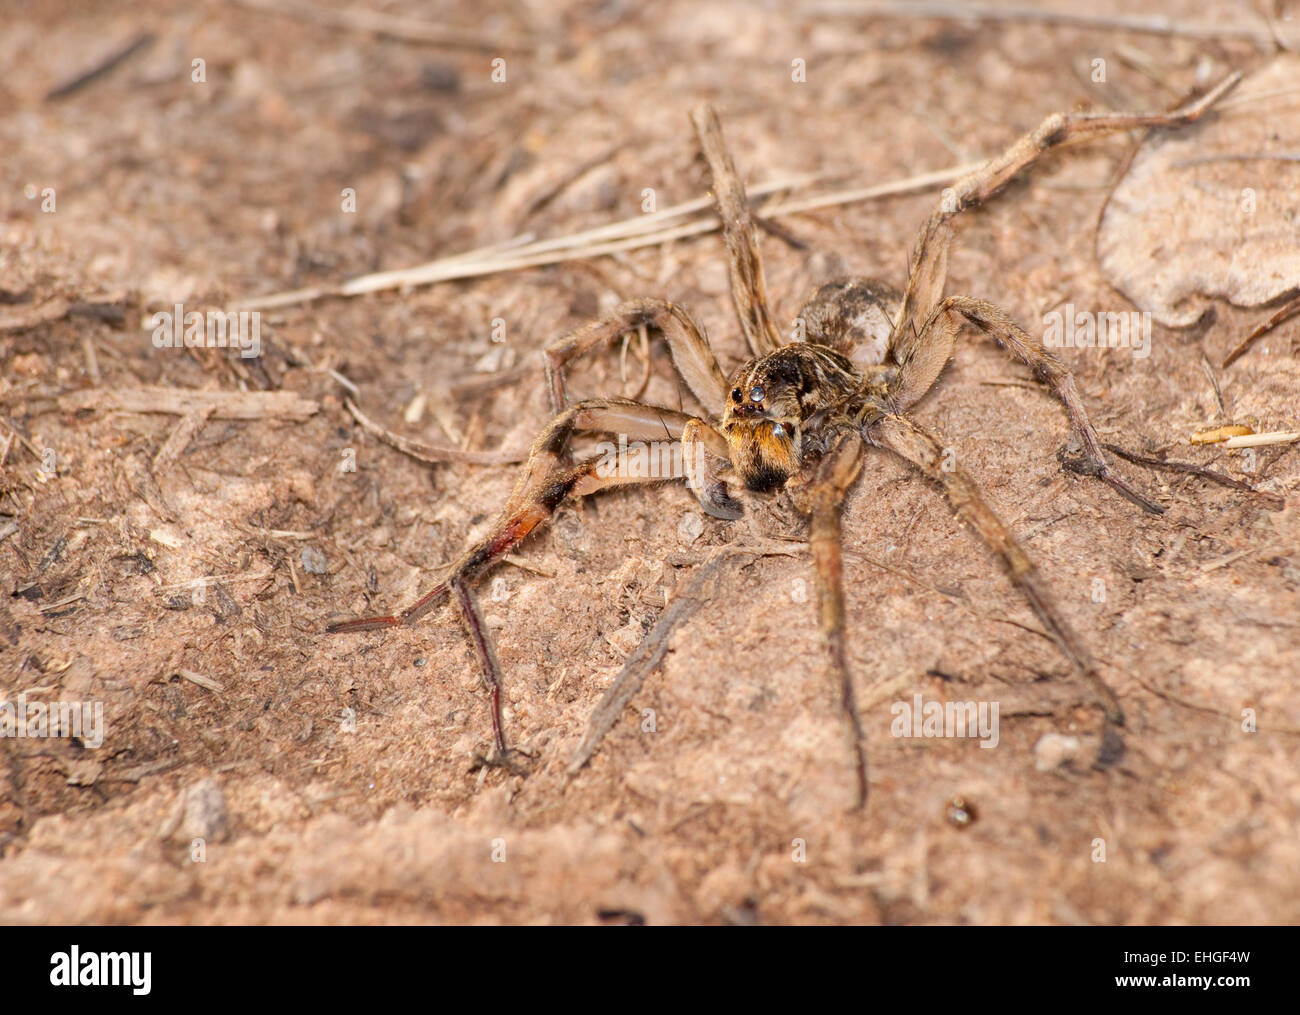 Scavando Wolf Spider, Geolycosa, nel suo ambiente naturale Foto Stock